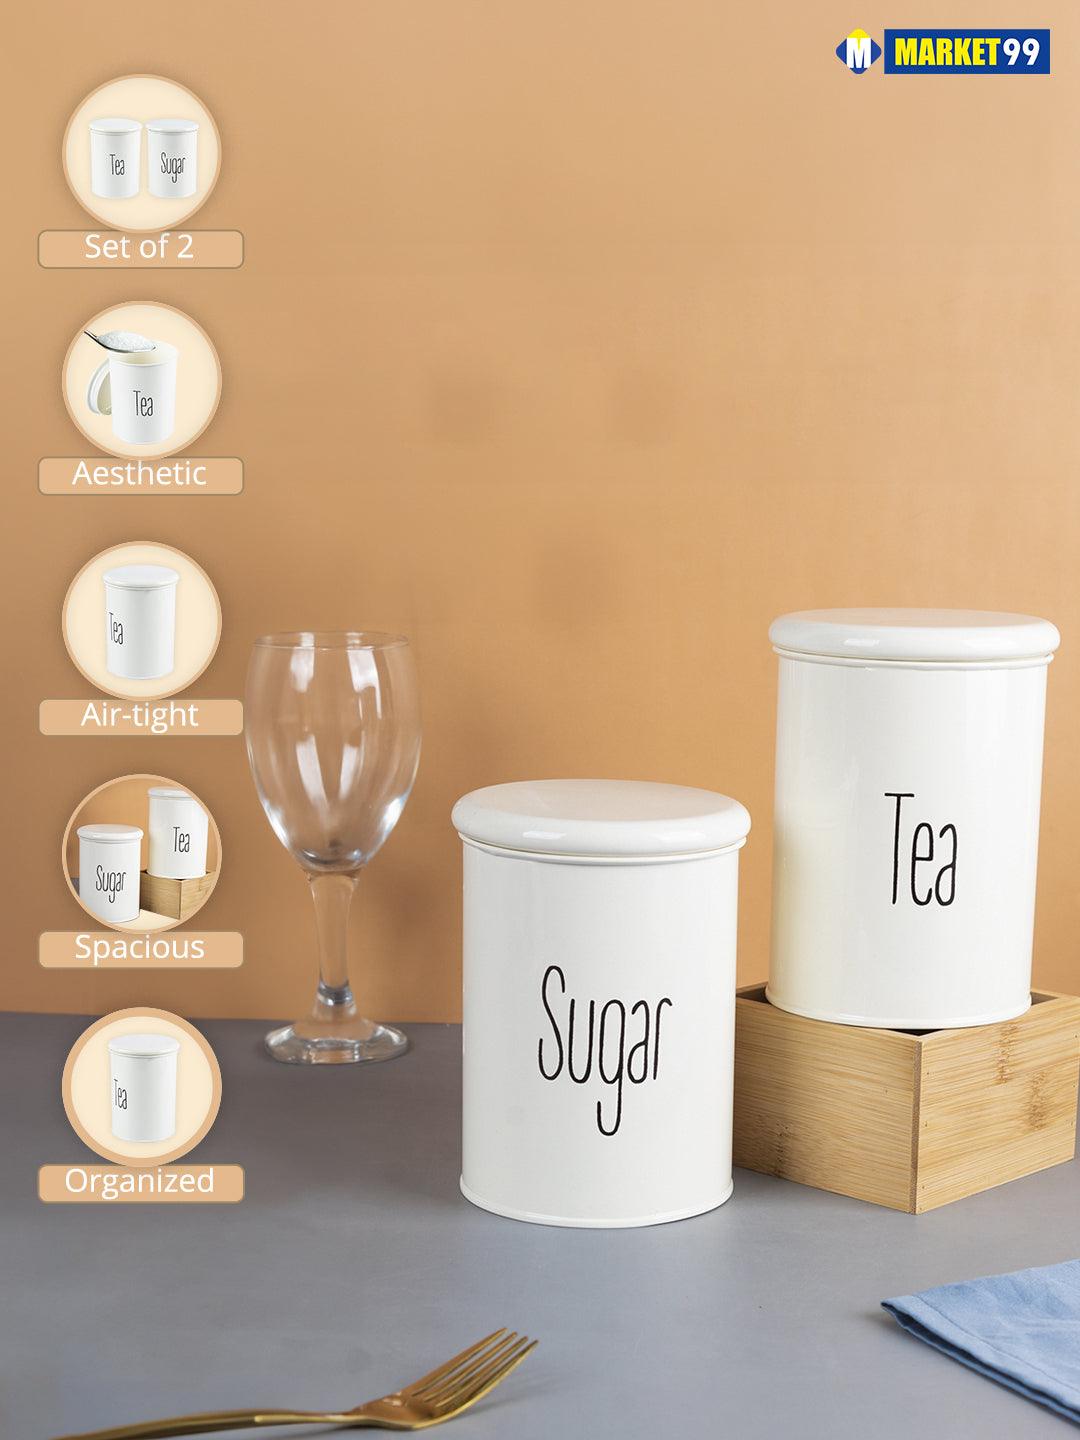 Tea & Sugar Jars - Set Of 2 (White, Each 900 mL) - MARKET99